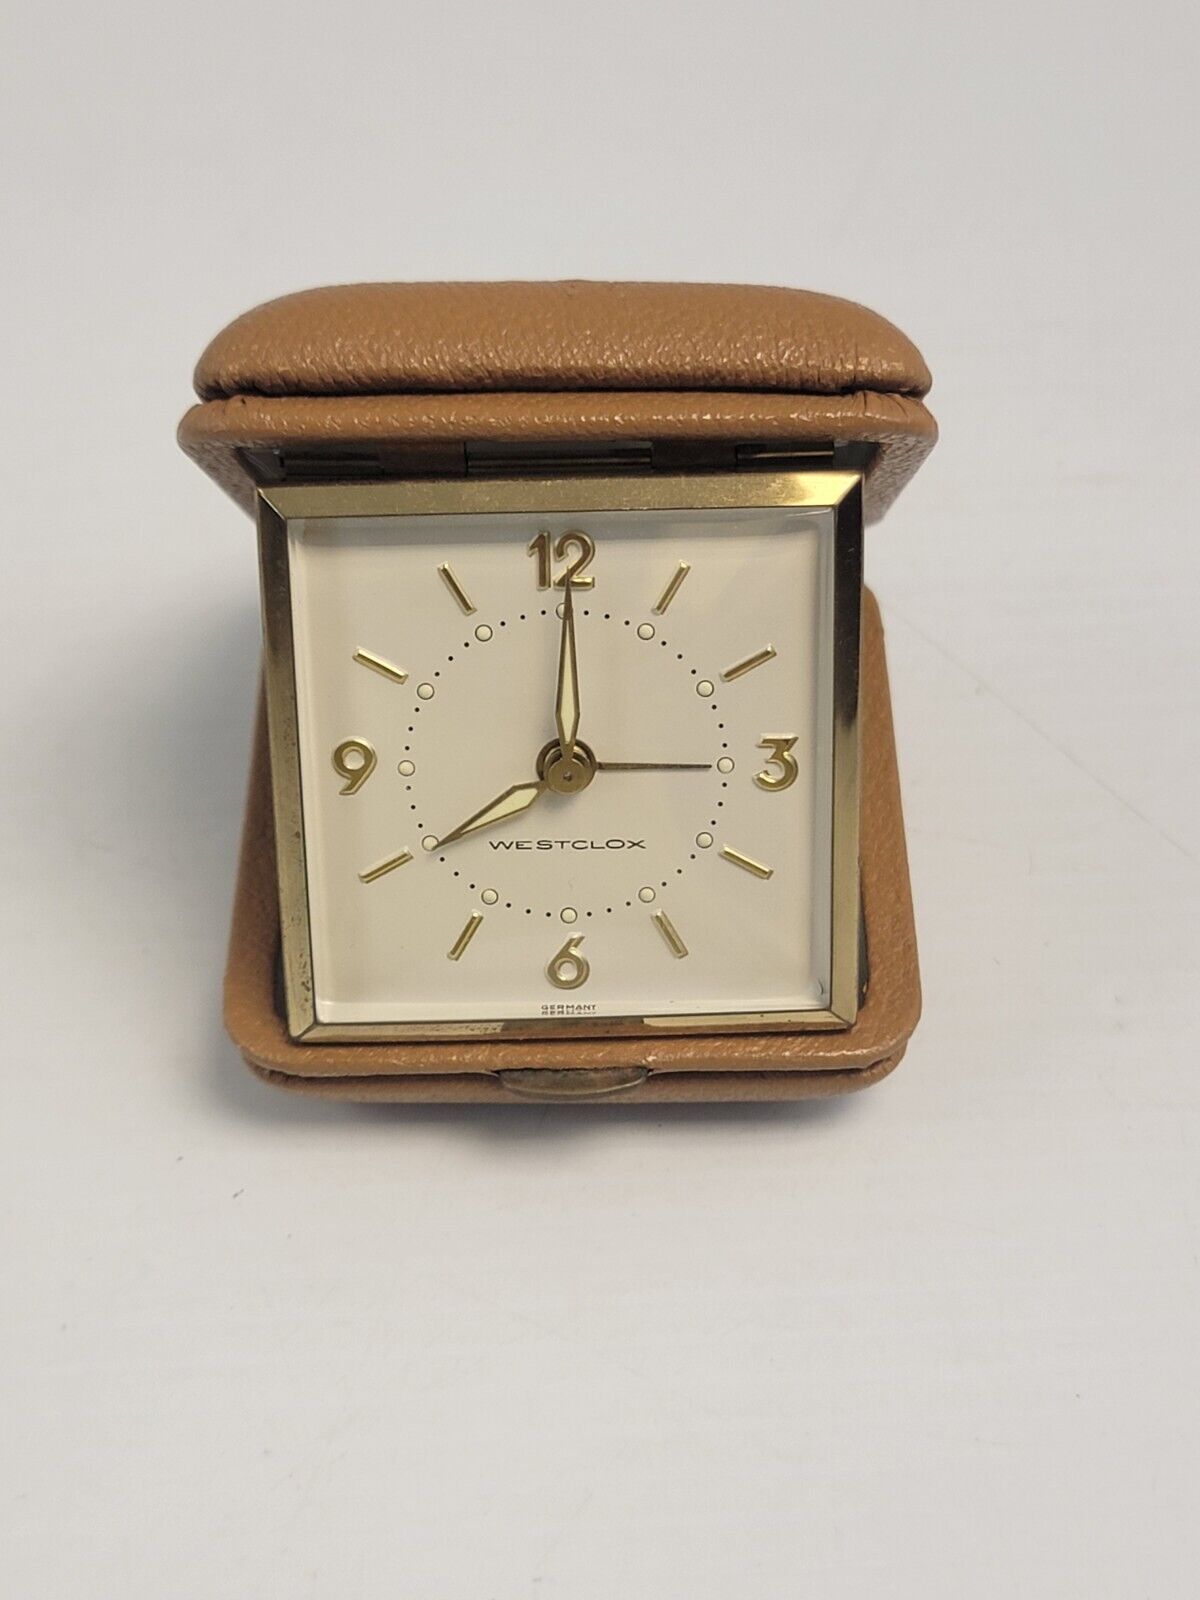 Vintage Westclox Alarm Clock Germany Portable Foldable Mechanical Running